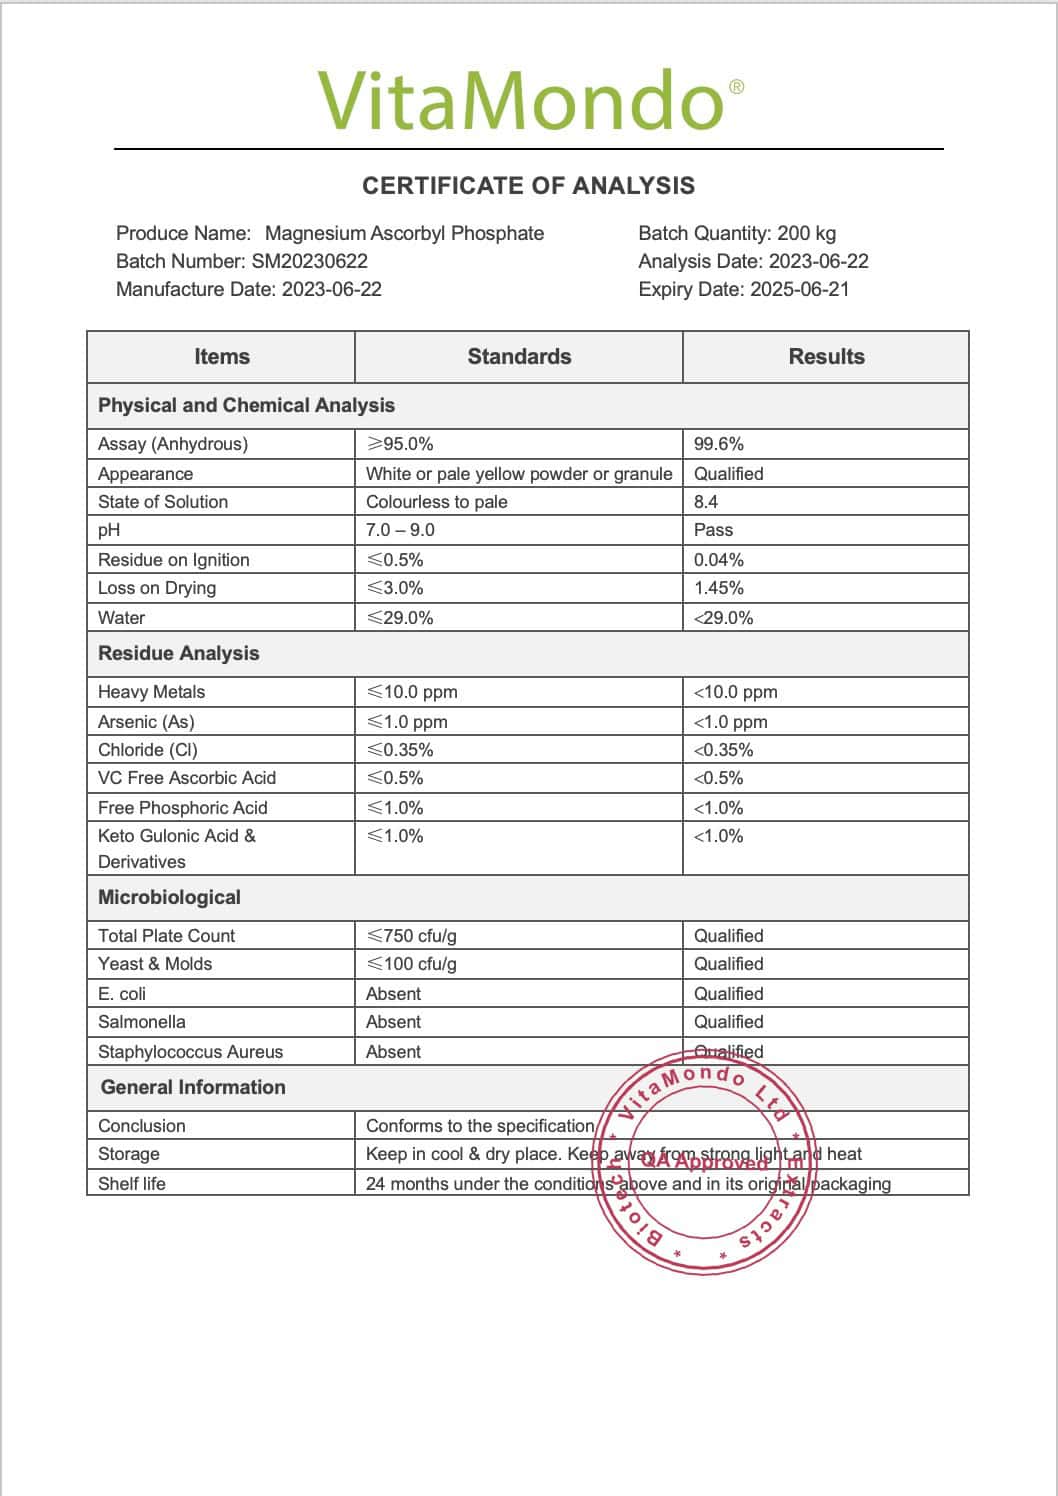 Magnesium Ascorbyl Phosphate COA 99% VitaMondo stamped